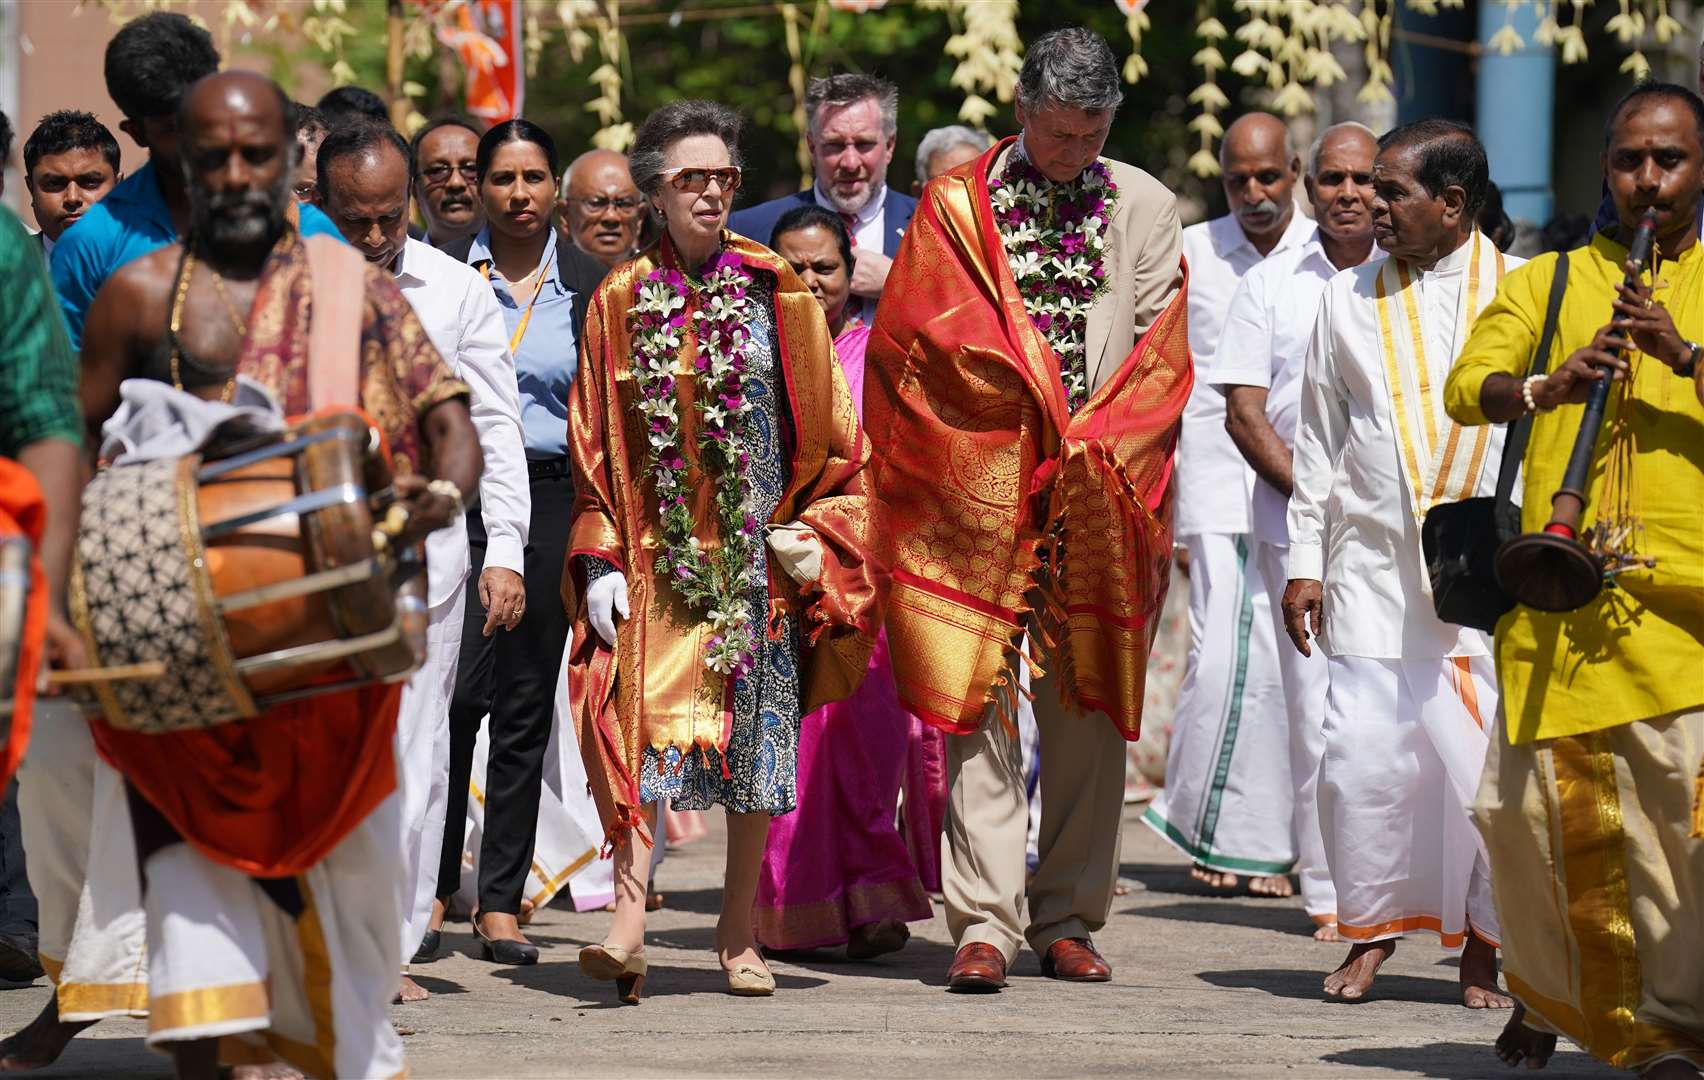 The Princess Royal and her husband Vice Admiral Sir Timothy Laurence visited Vajira Pillayar Kovil Hindu temple in Colombo (Jonathan Brady/PA)